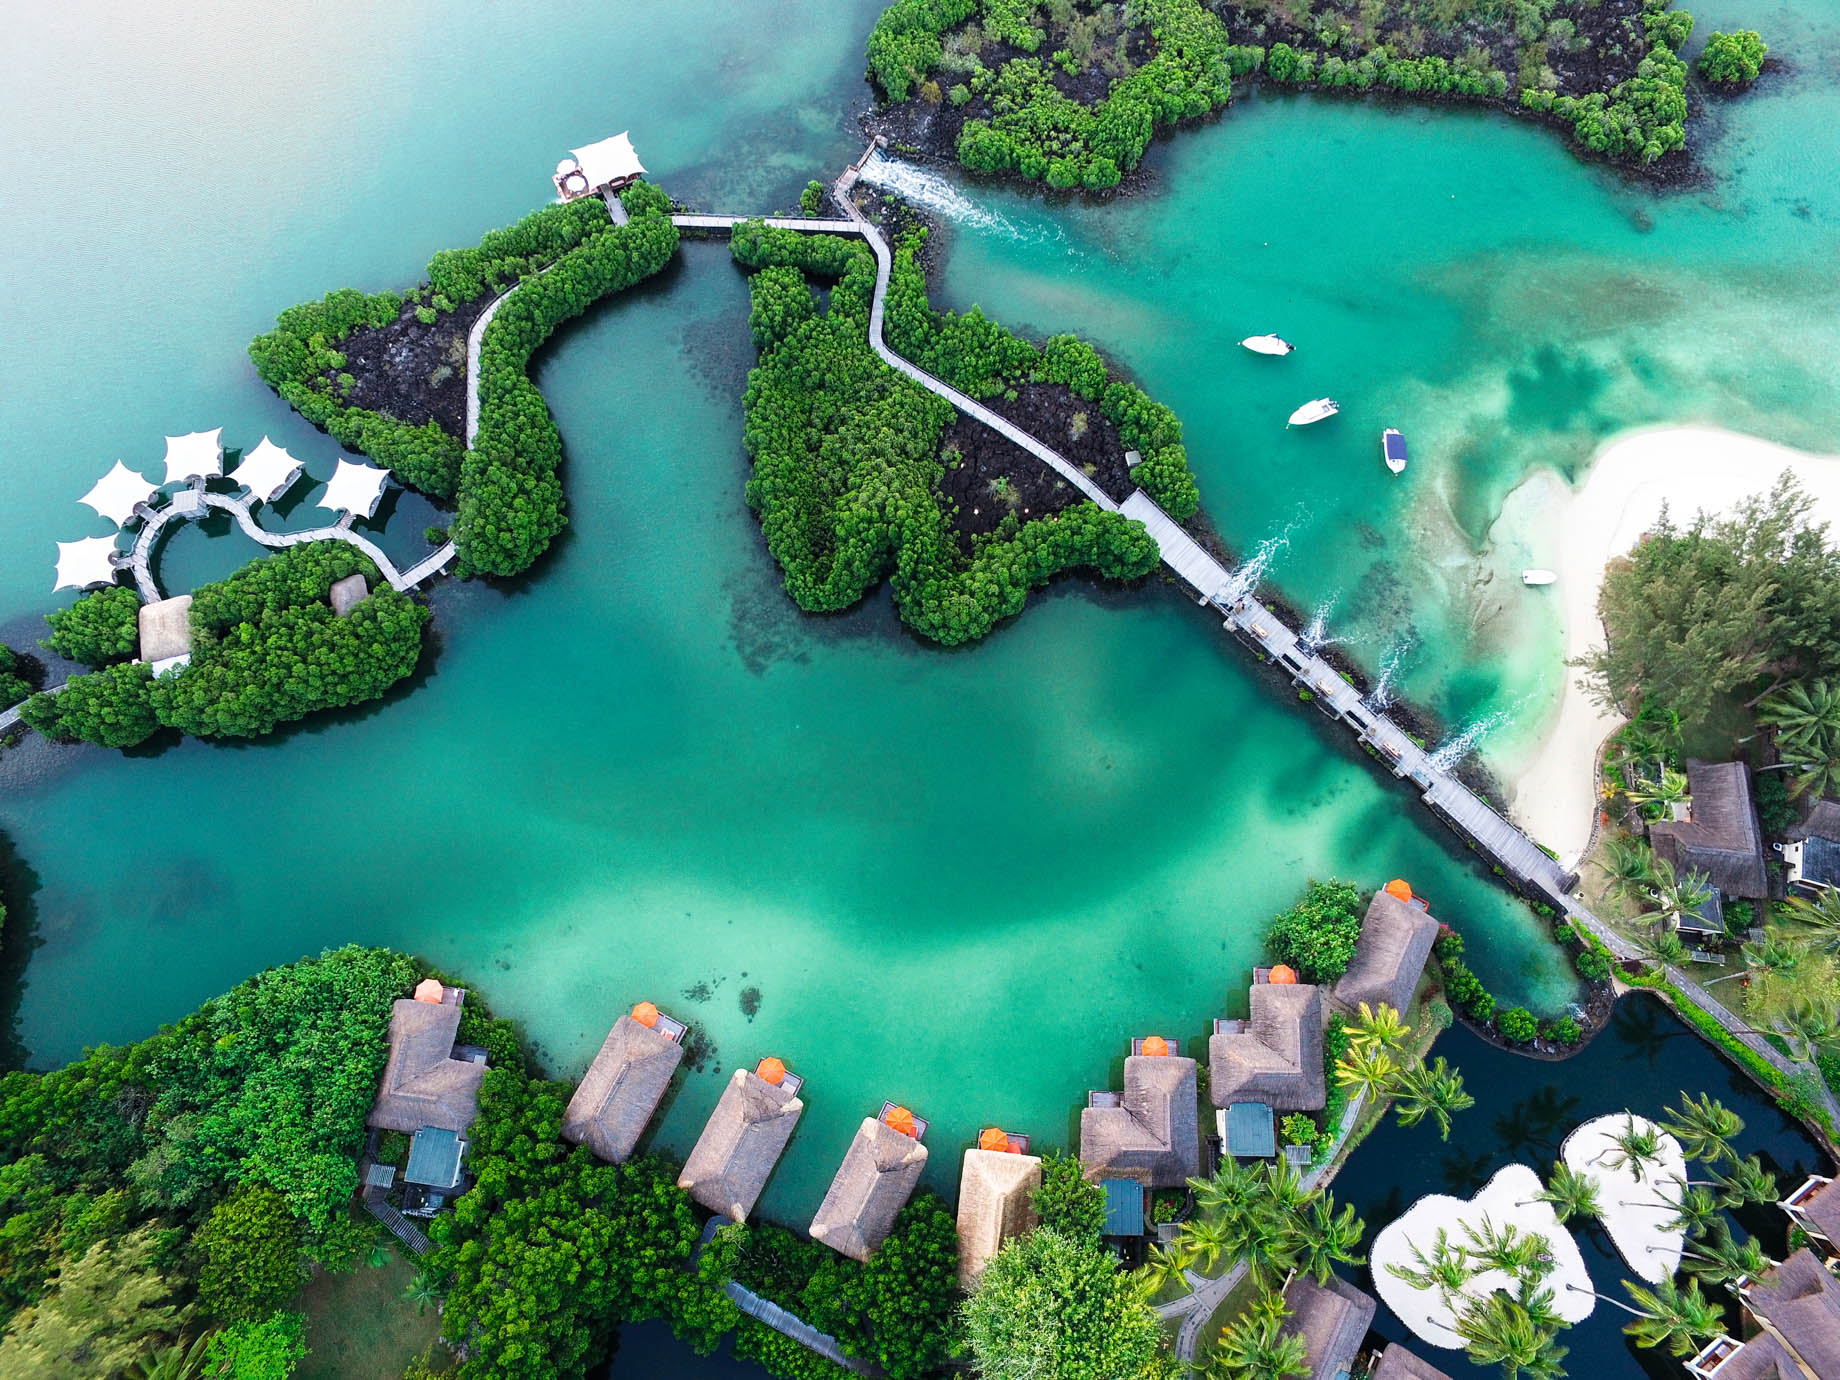 Constance Prince Maurice Resort – Mauritius – Resort Aerial View